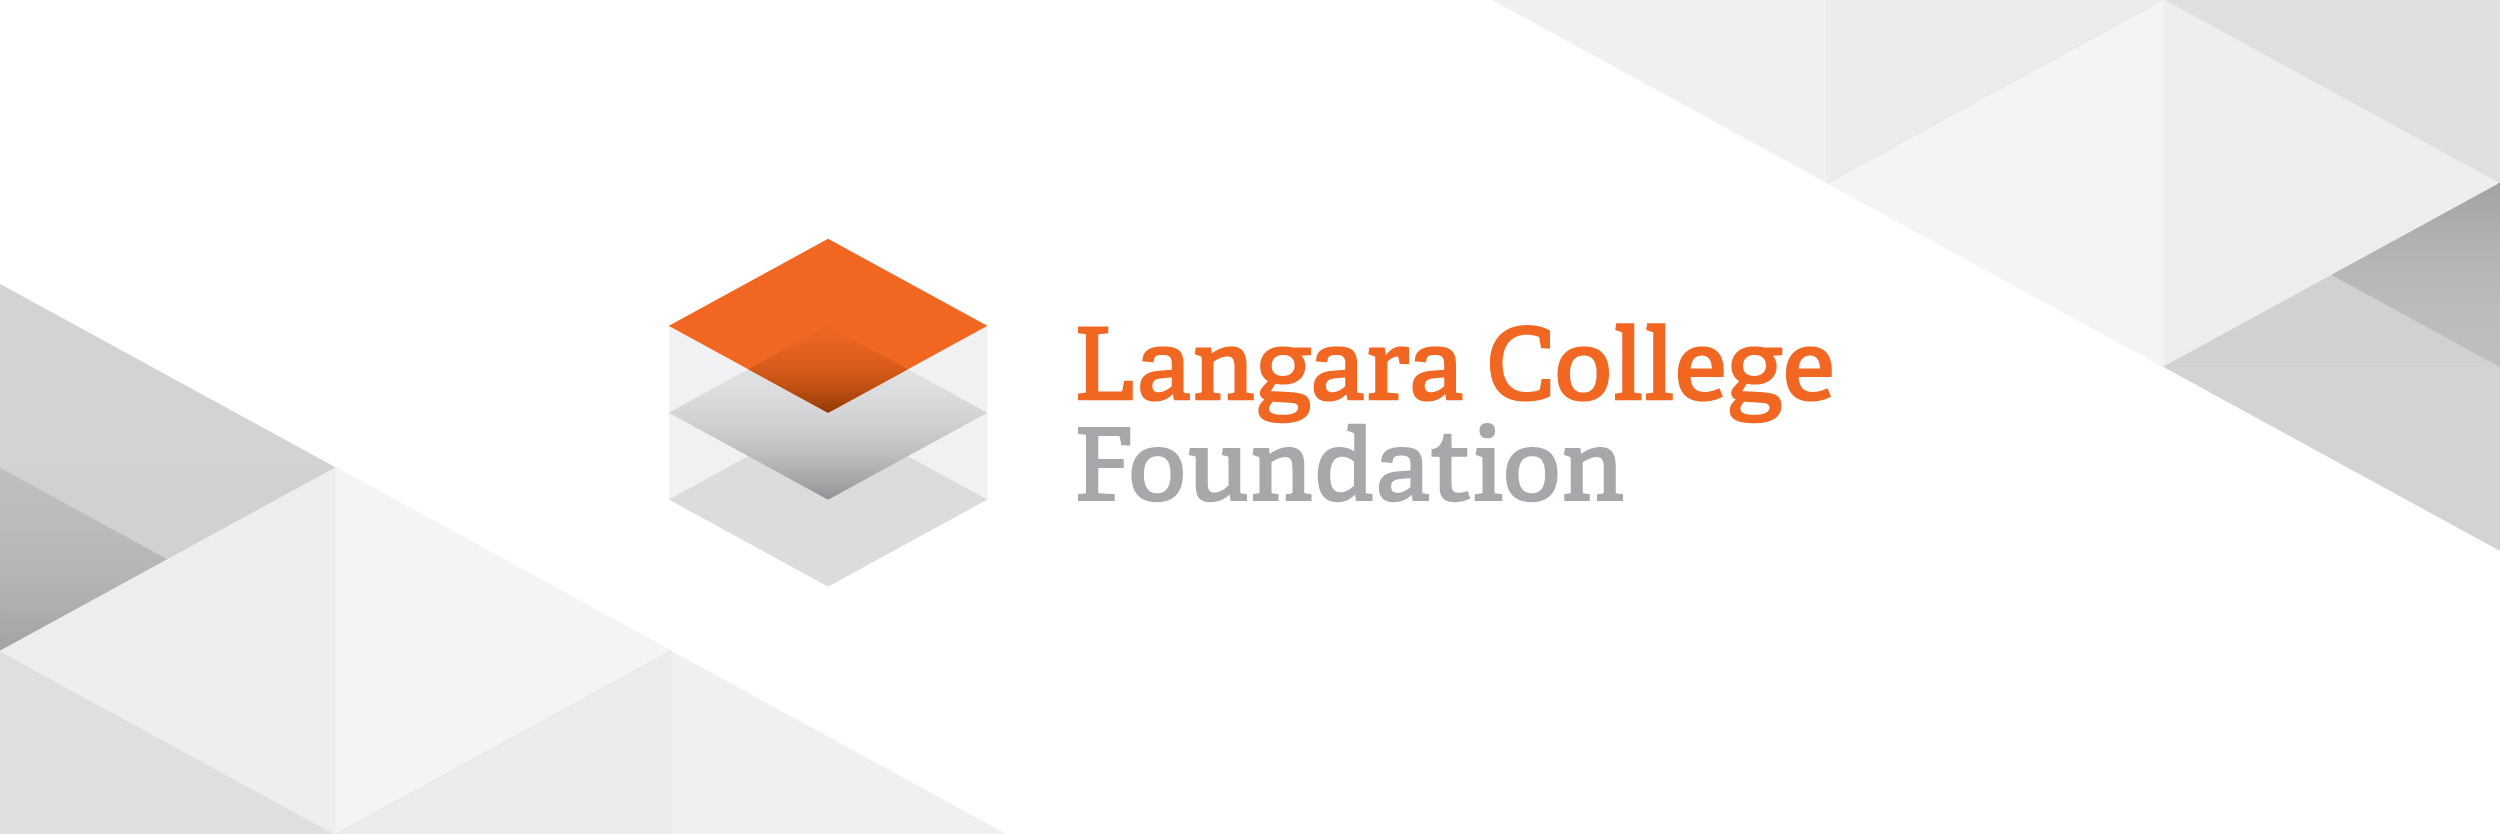 Langara College Foundation Welcomes New Members